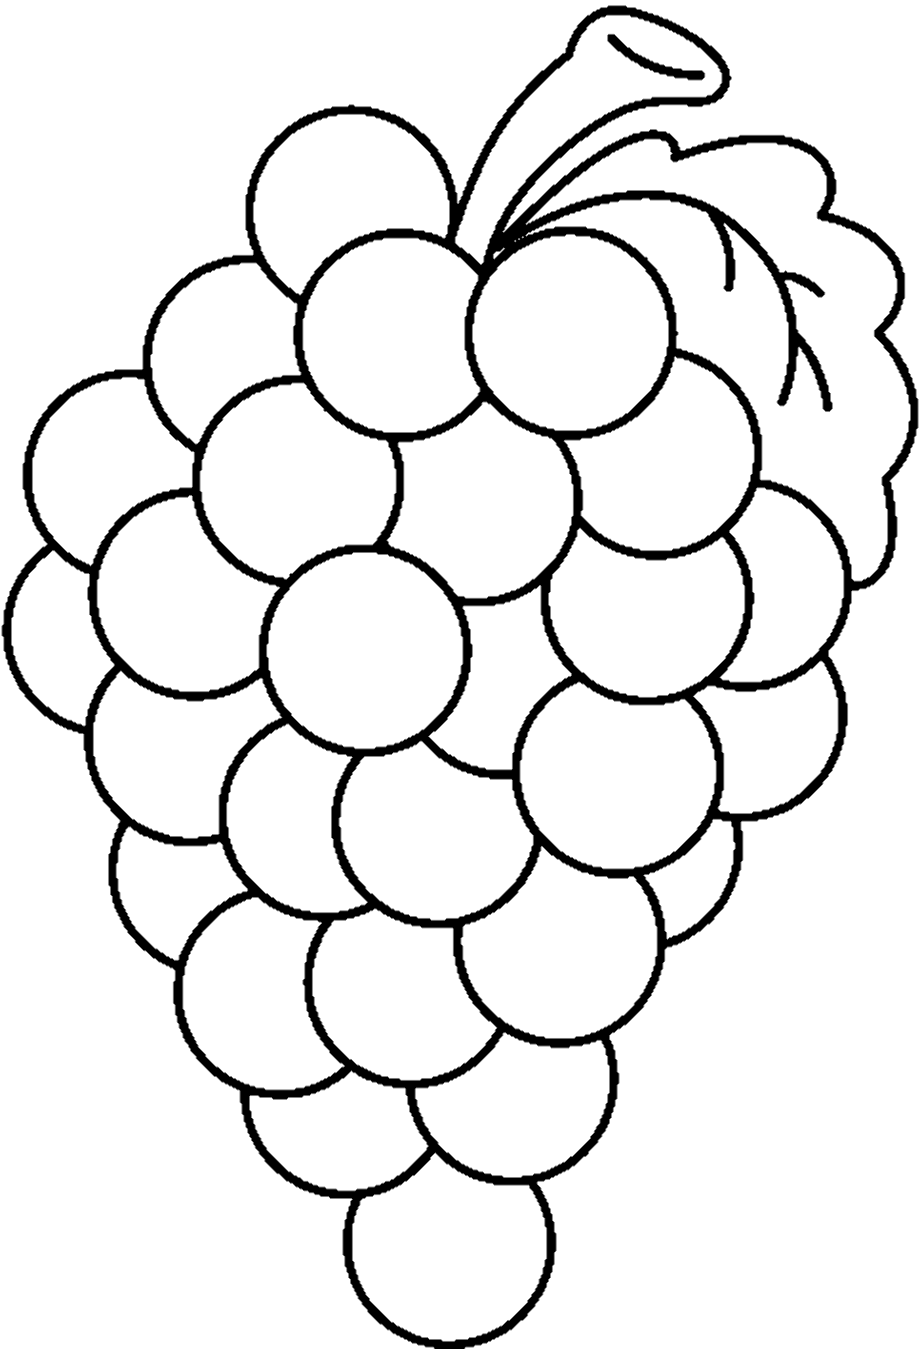 grape clipart coloring